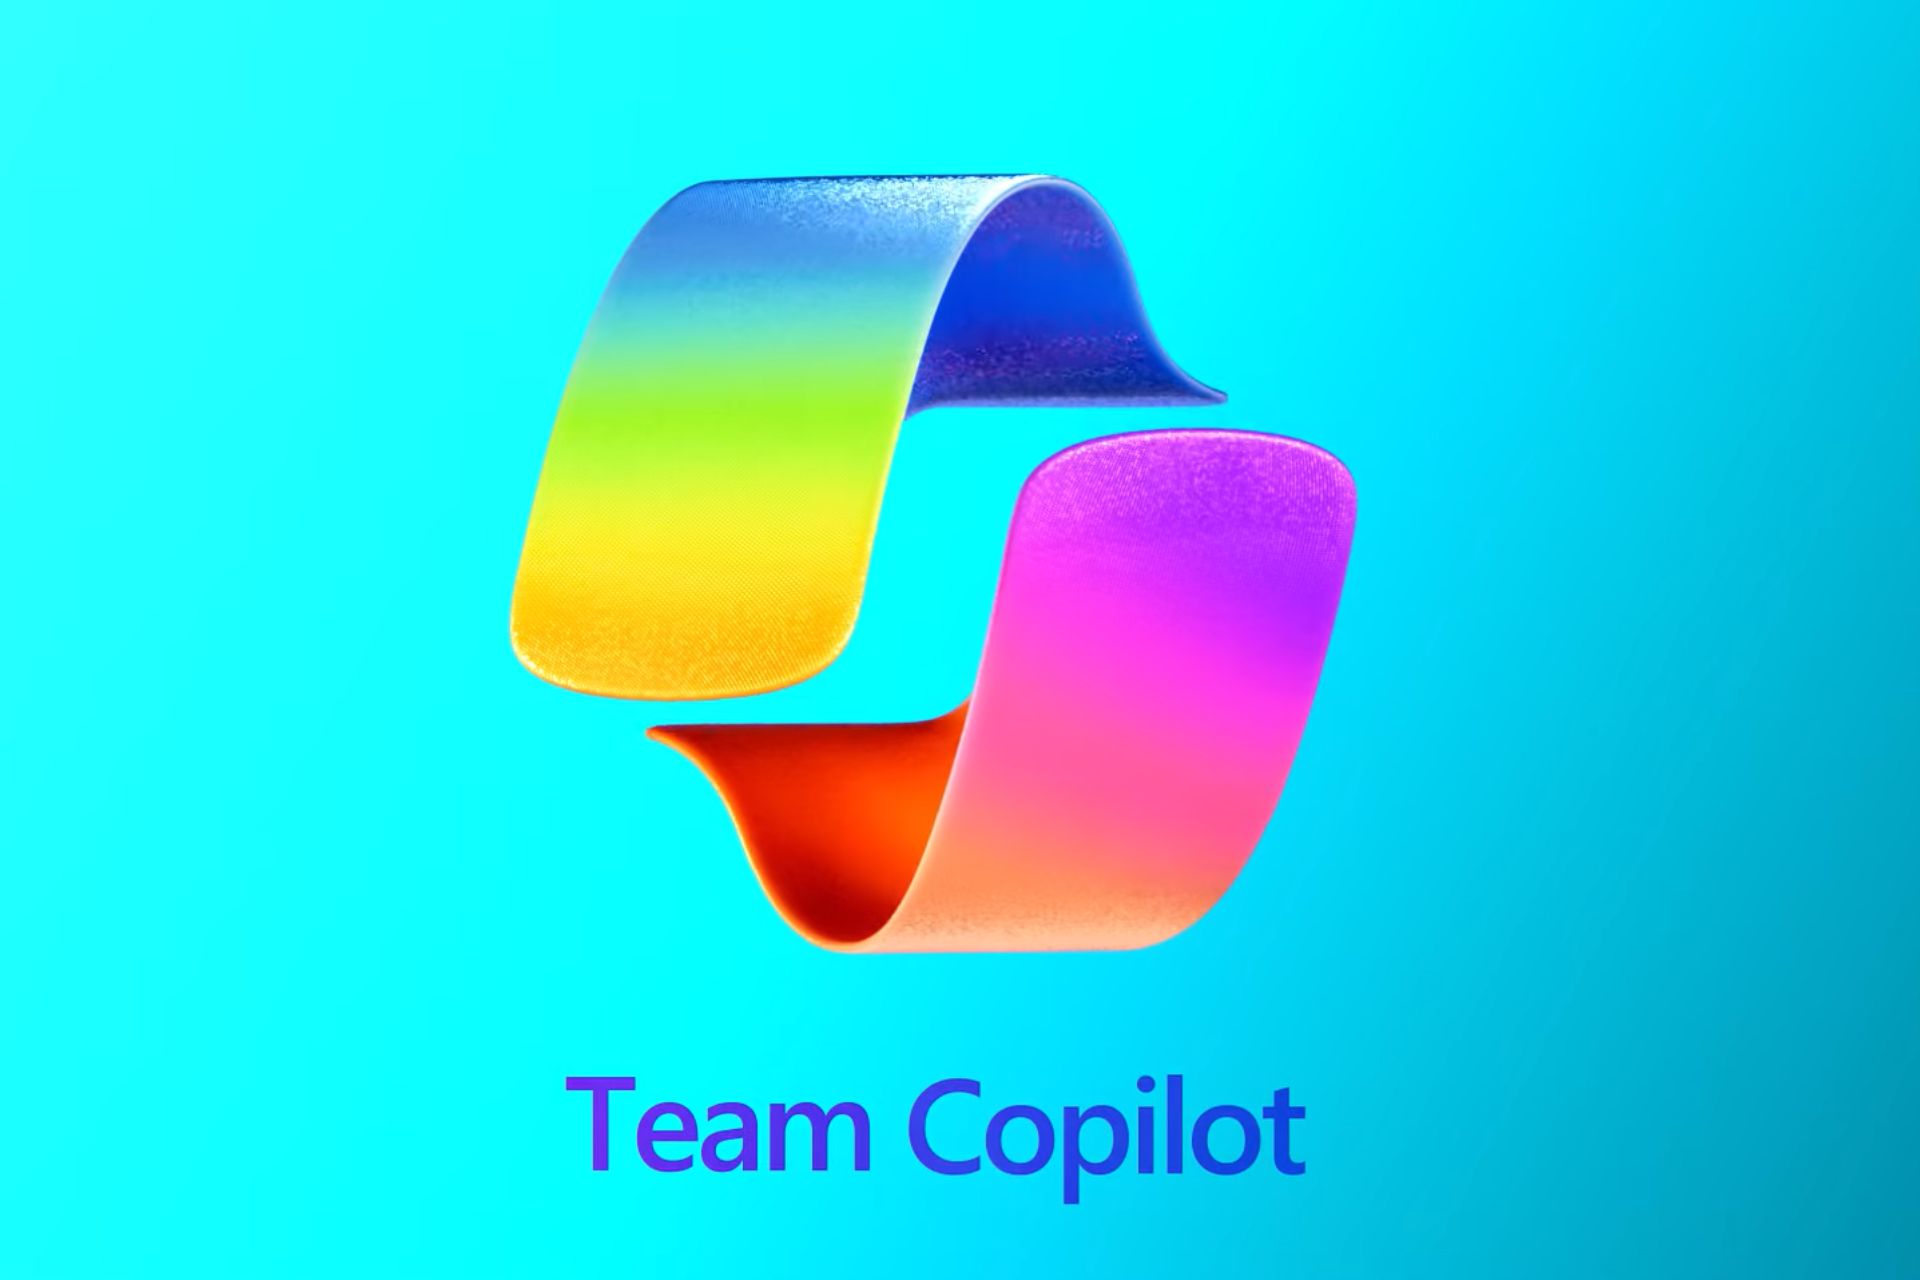 Microsoft Team Copilot